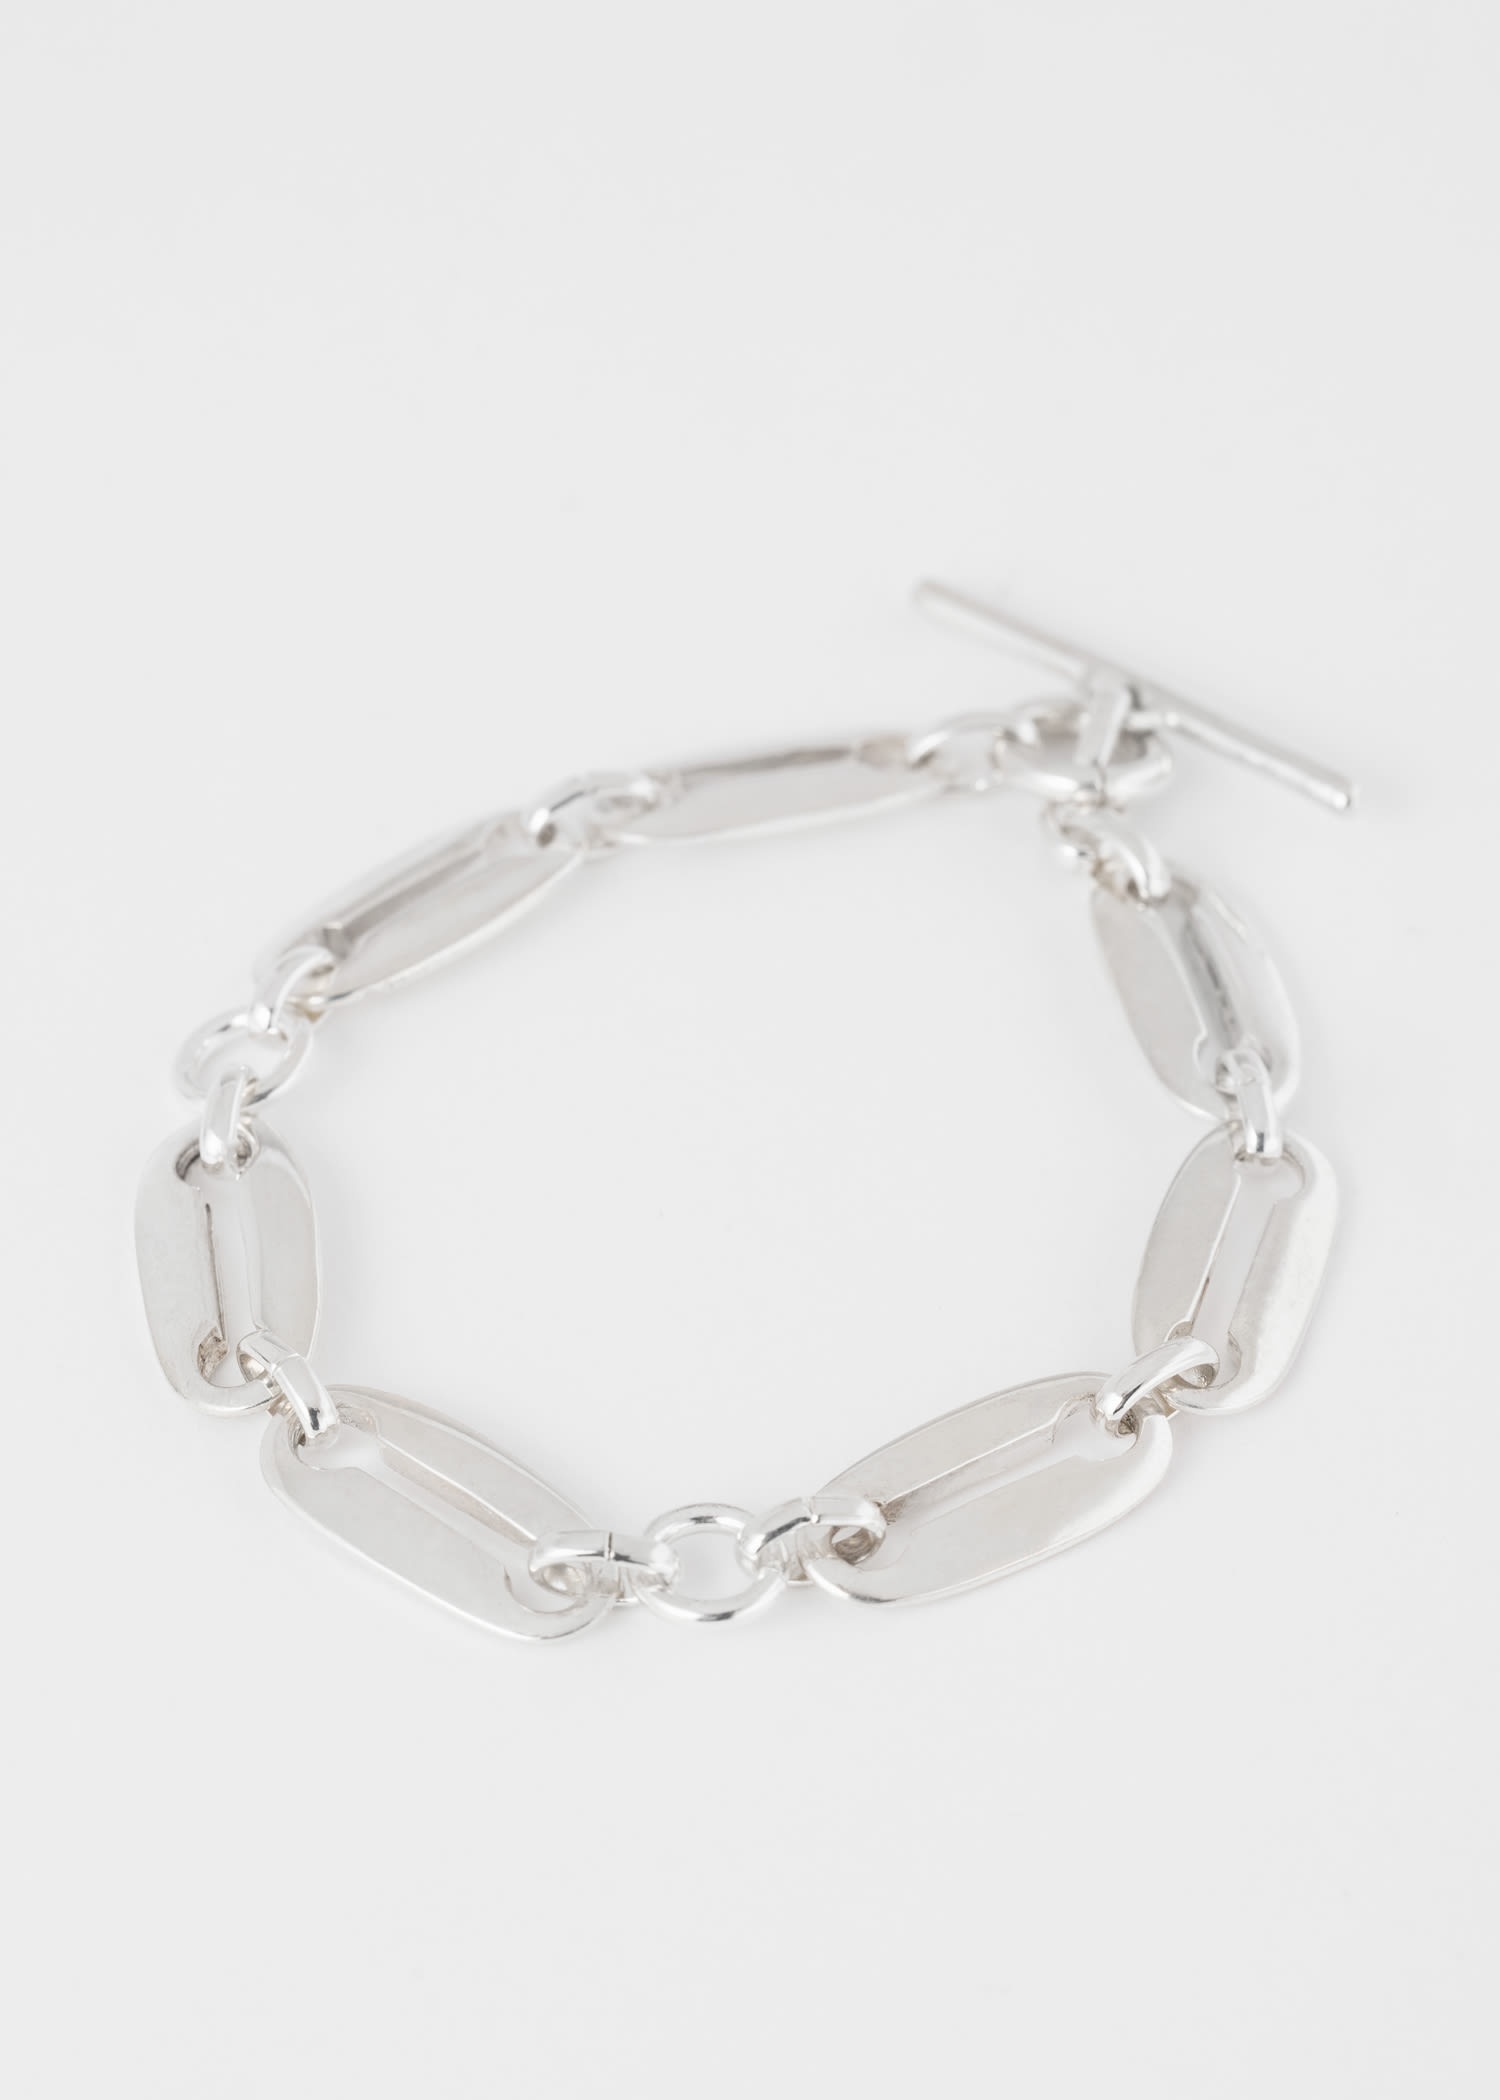 Oval Link Bracelet by Helena Rohner - 2